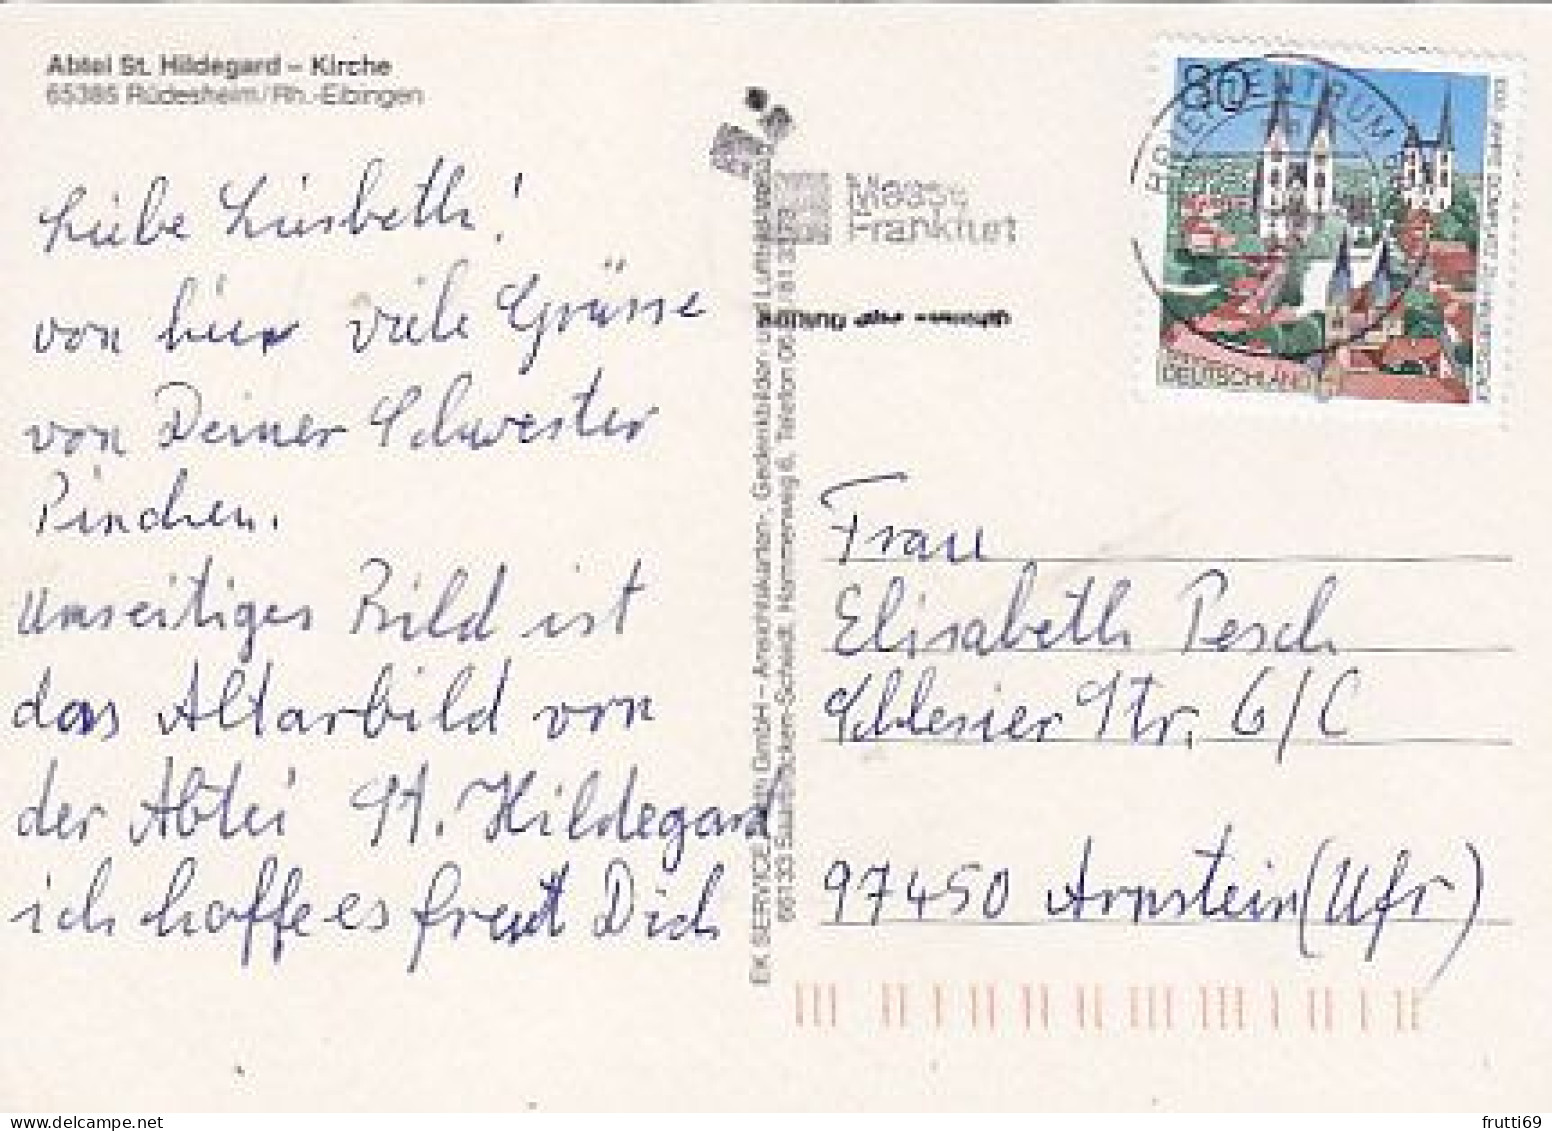 AK 215454 CHURCH / KIRCHE ... - Rüdesheim / Rh.-Eibingen - Abtei St. Hildegard Kirche - Iglesias Y Las Madonnas